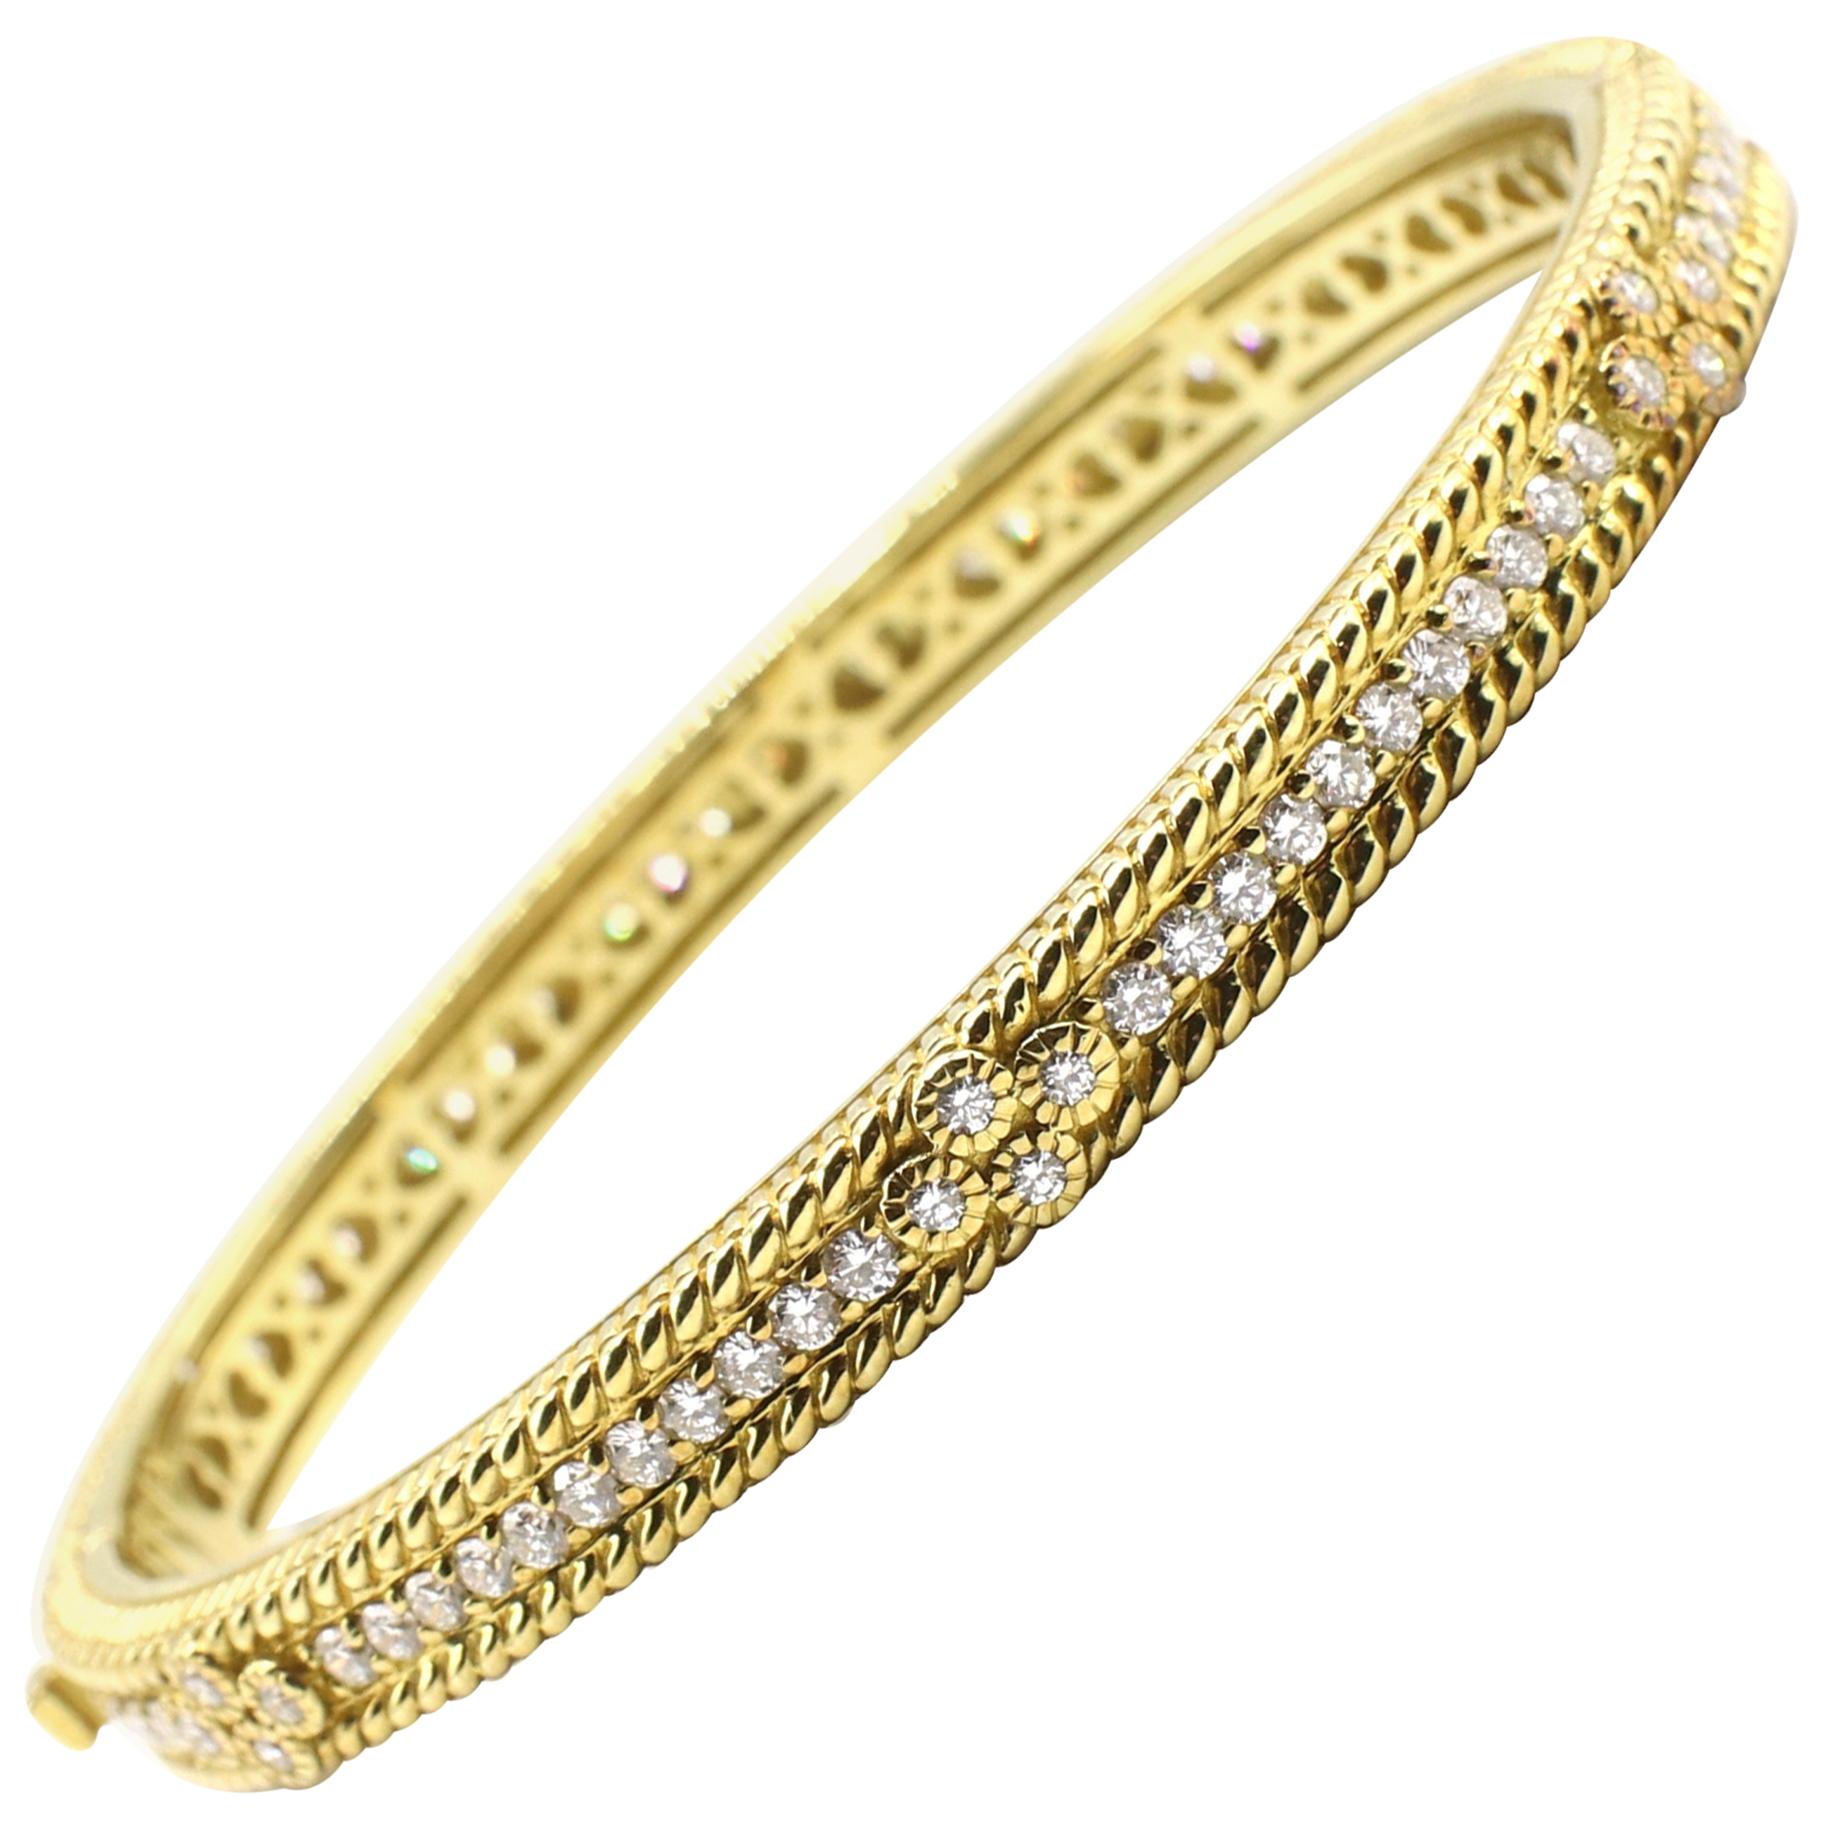 Judith Ripka Romance 18K Yellow Gold Diamond 2.50 Carat Bangle Bracelet Hinged